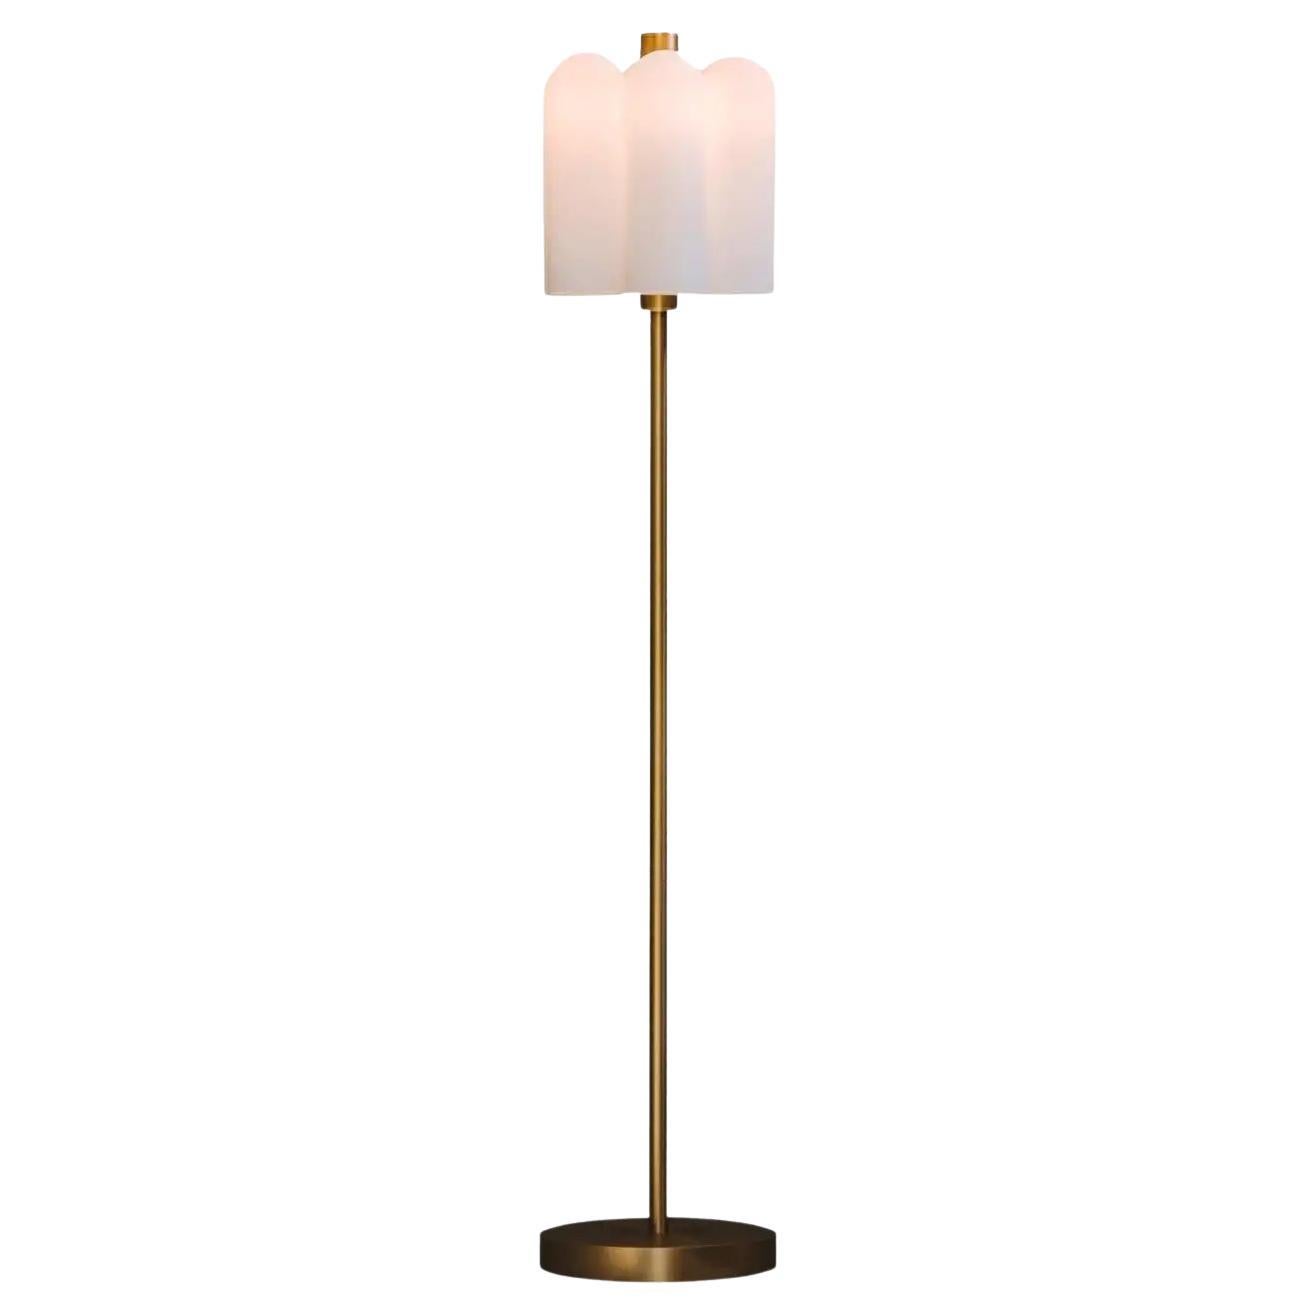 Odyssey 6 Brass Floor Lamp by Schwung For Sale